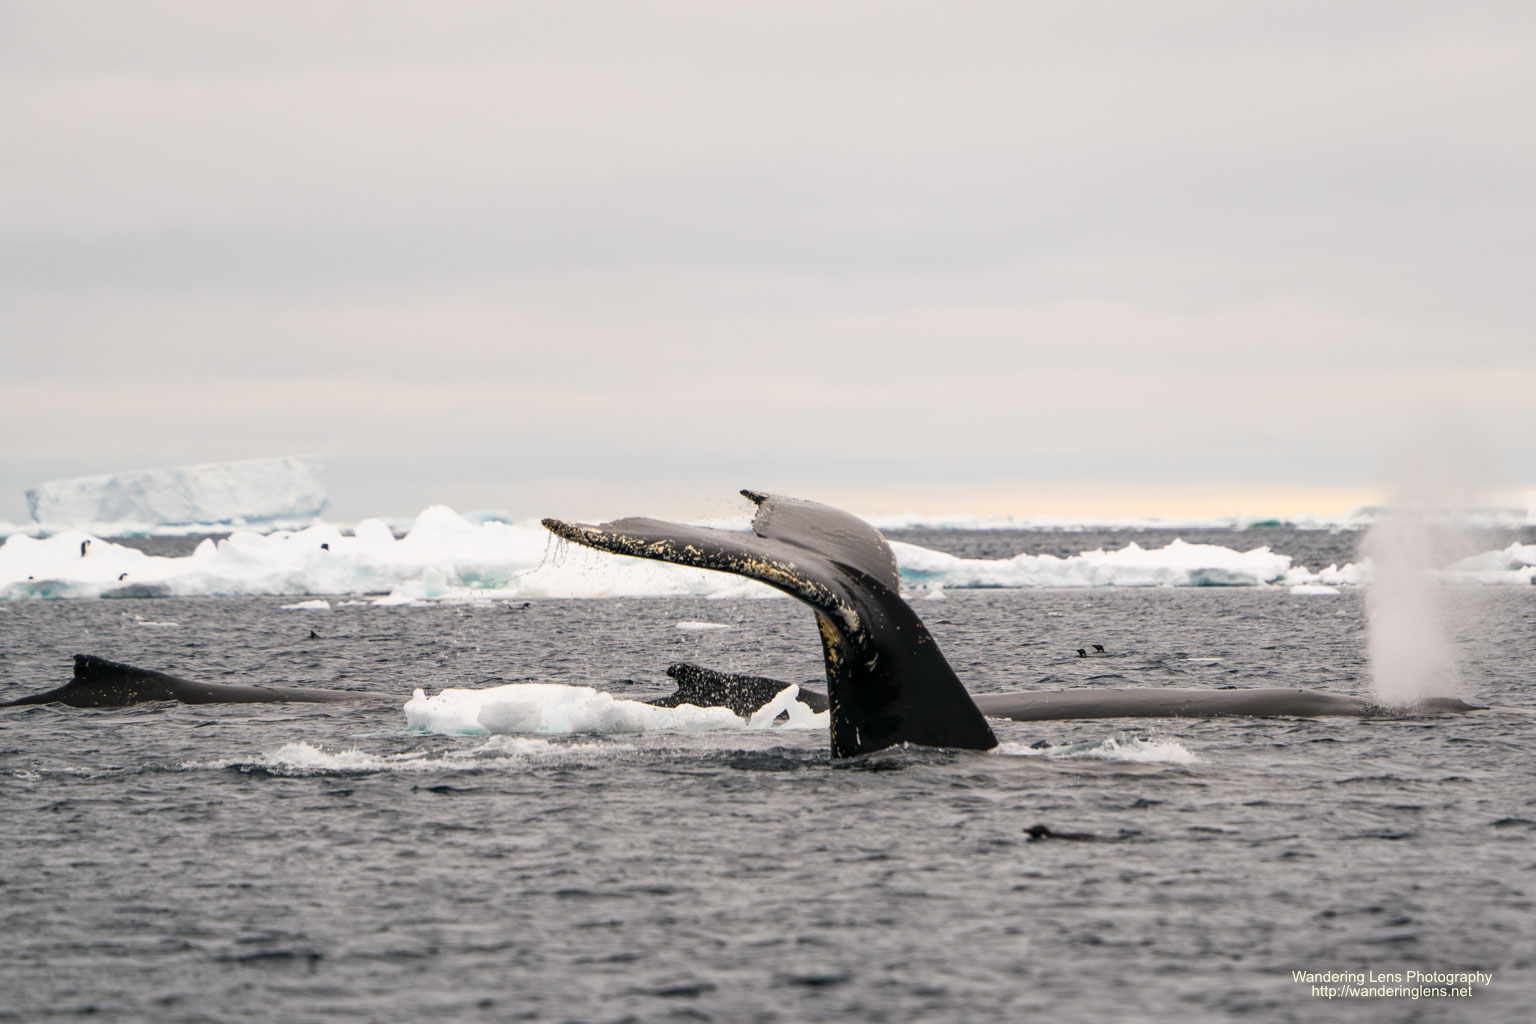 A humpback whale diving deep